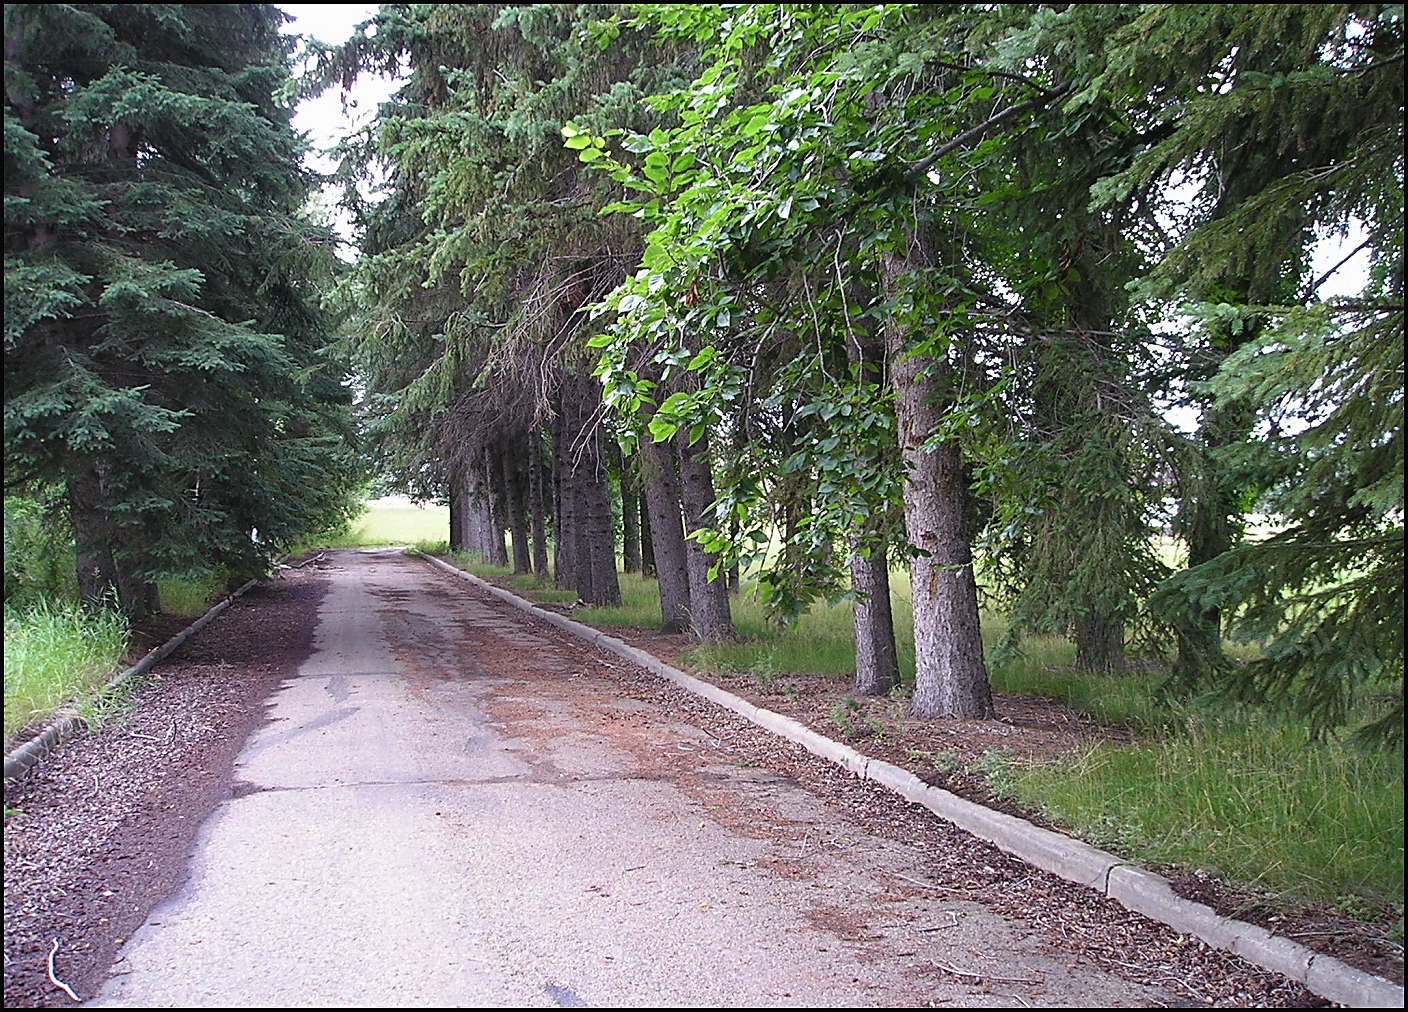 willow lane, 
in Ponoka, Alberta - 1.408 Mb